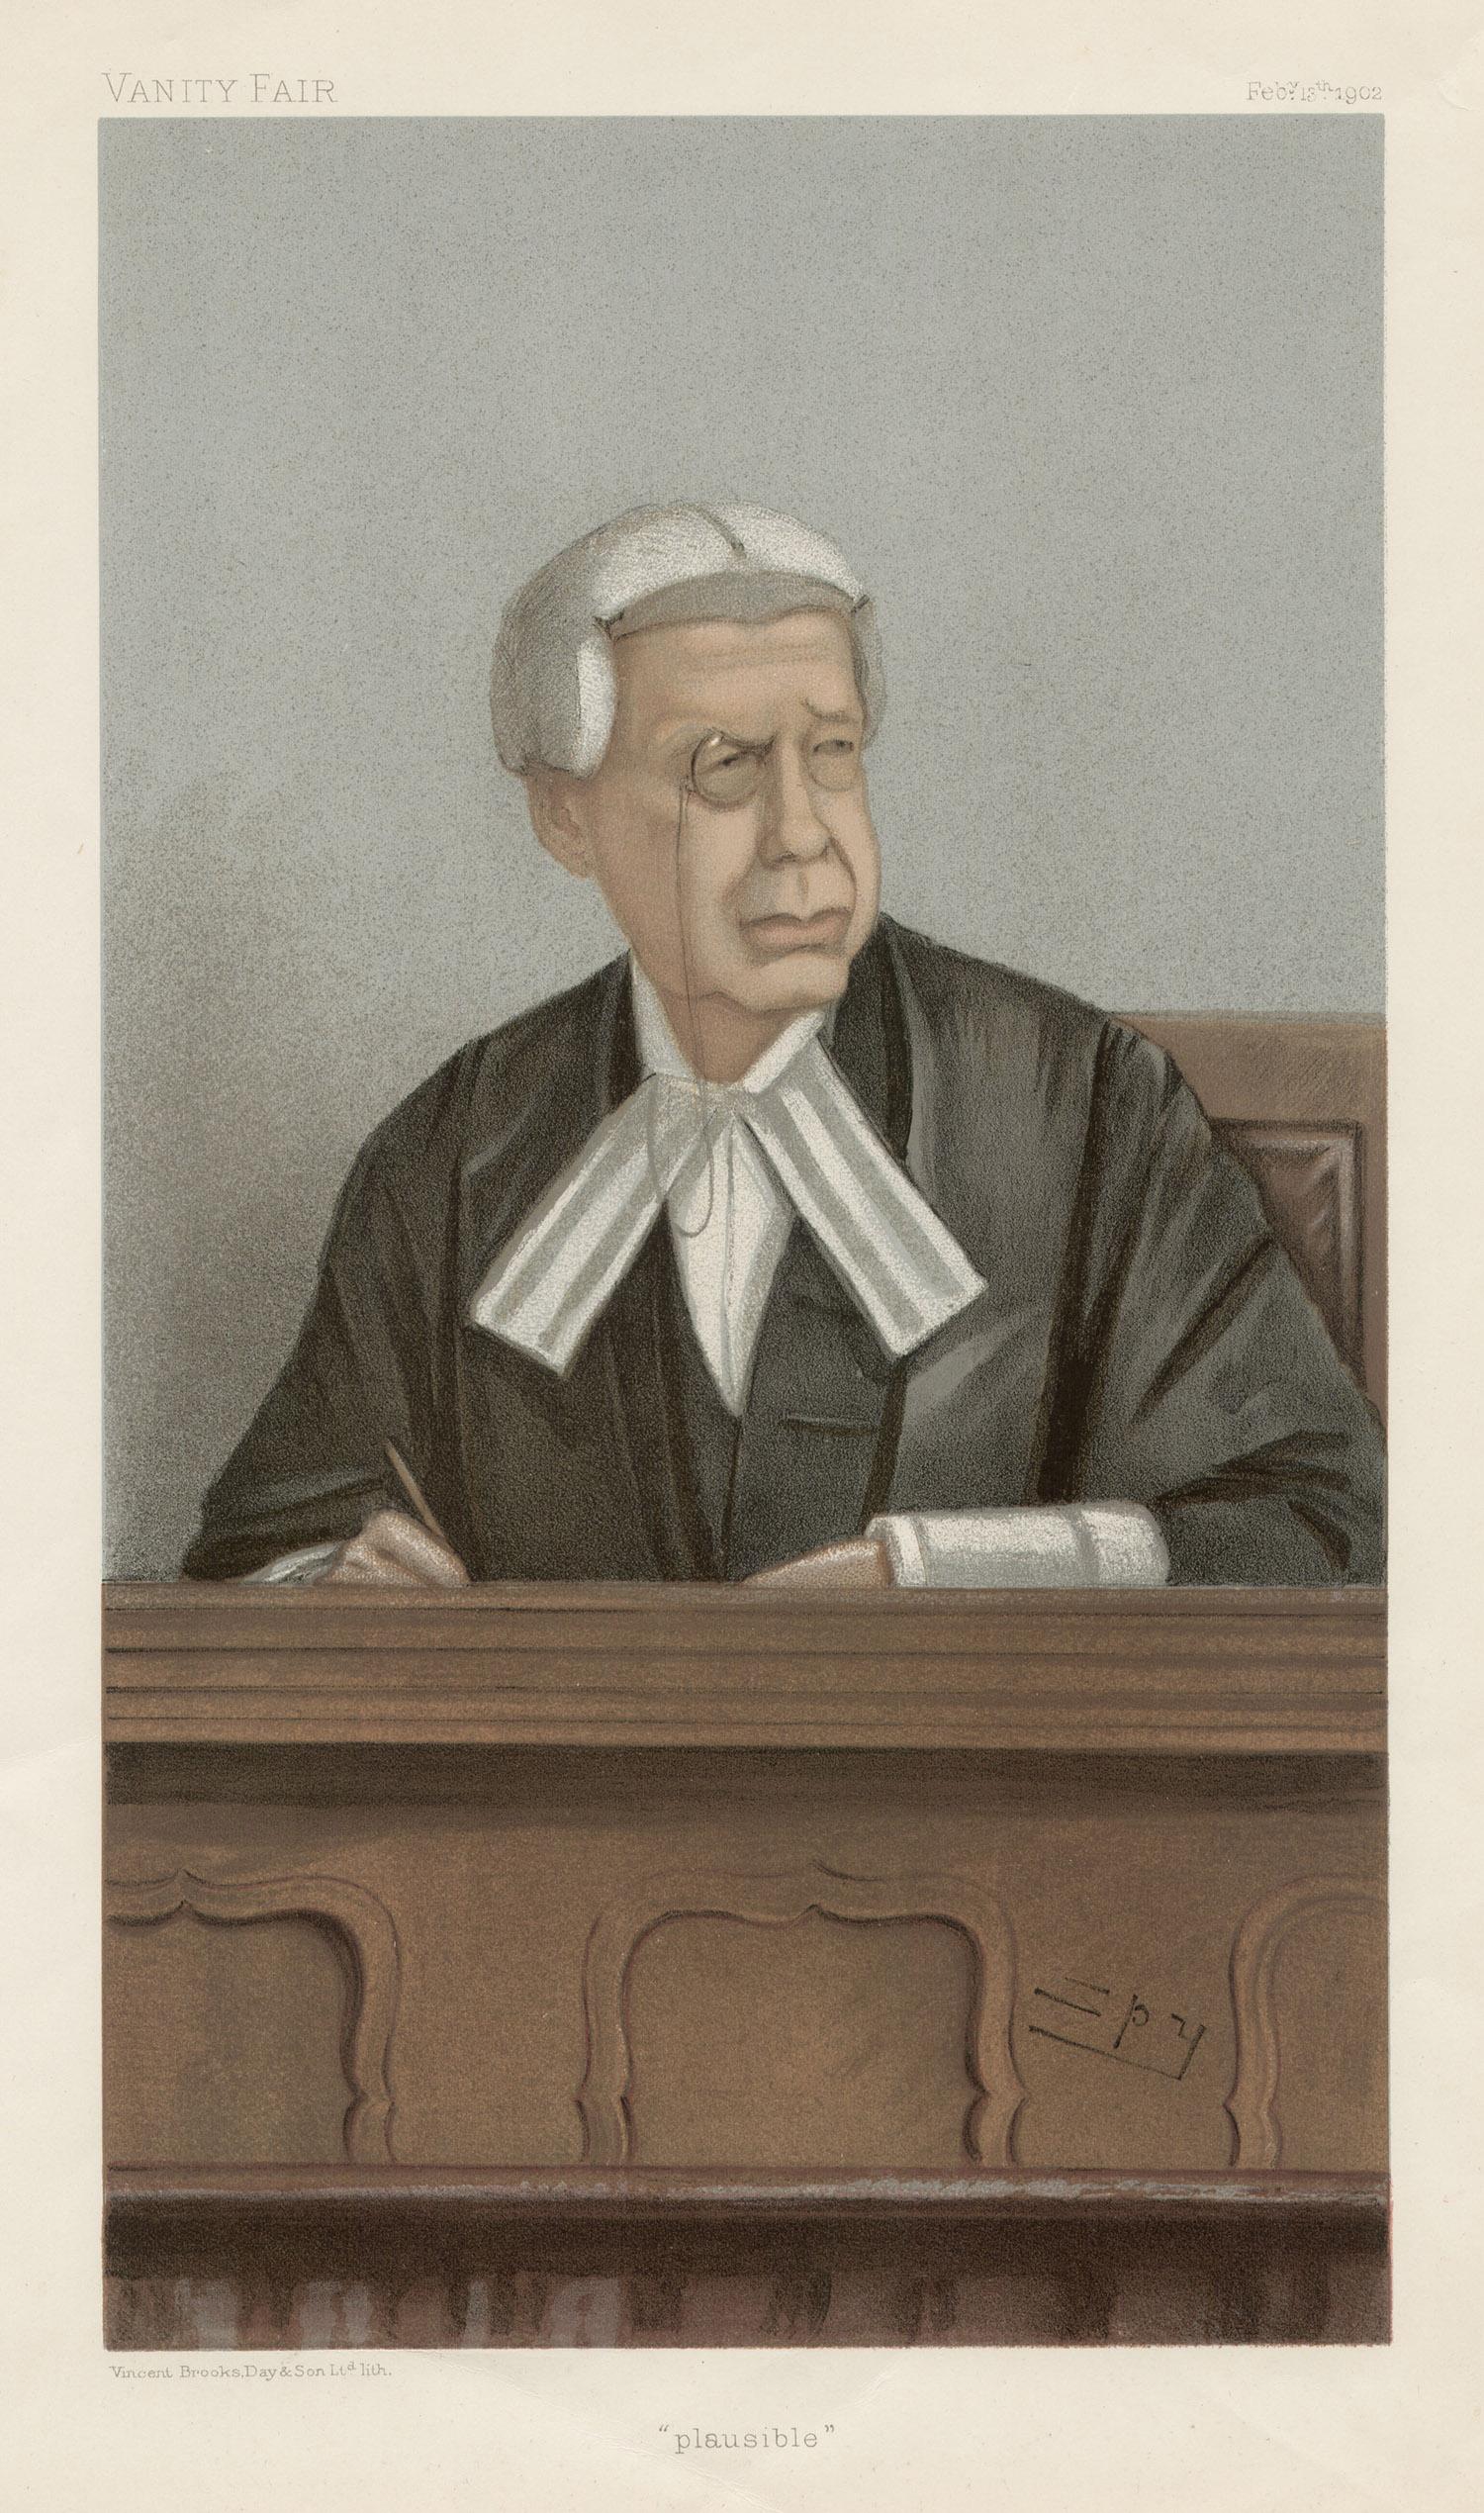 Hon. Mr Justice Swinfen Eady, Vanity Fair legal chromolithograph, 1902